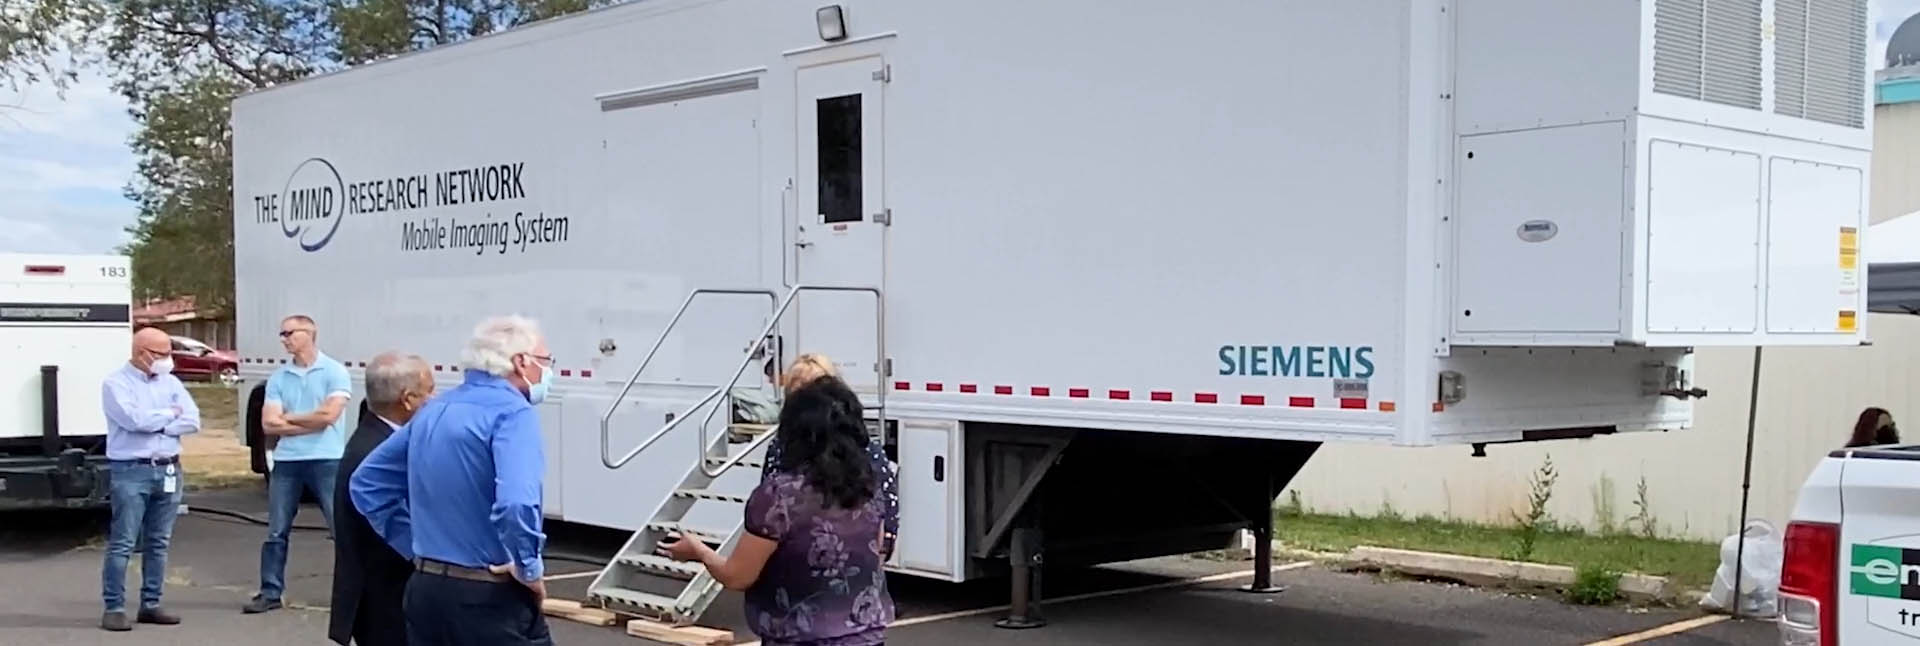 The mobile imaging system at Zuni Pueblo